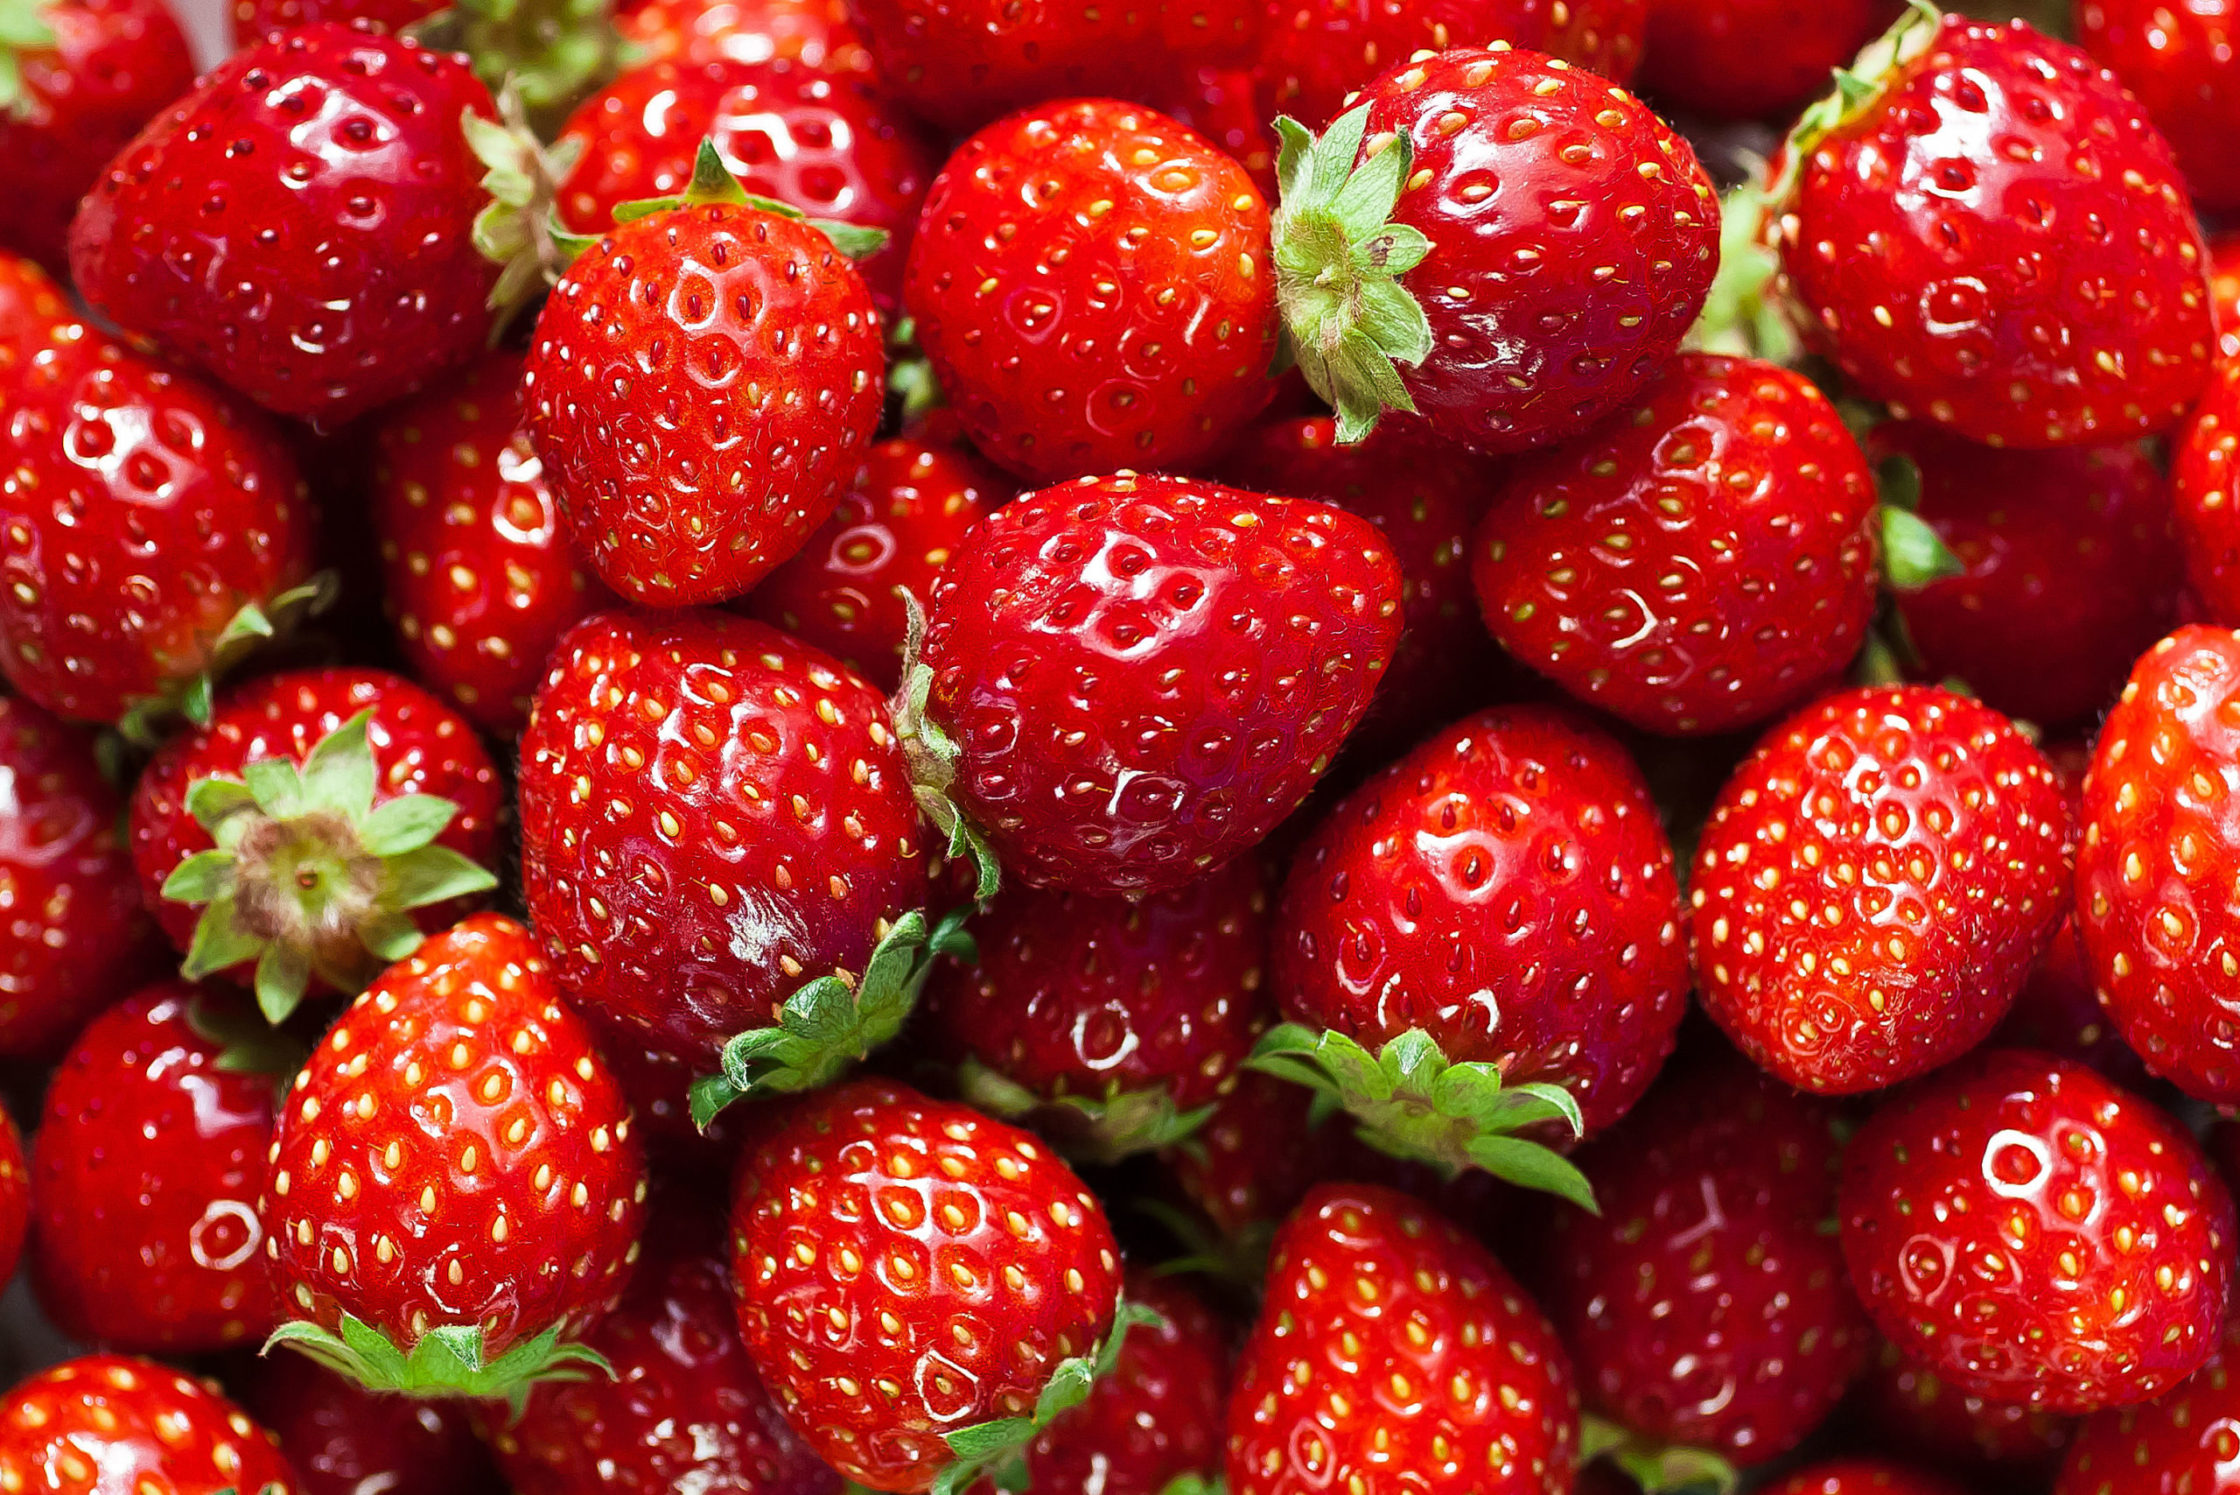 Produce of the Week: Strawberries